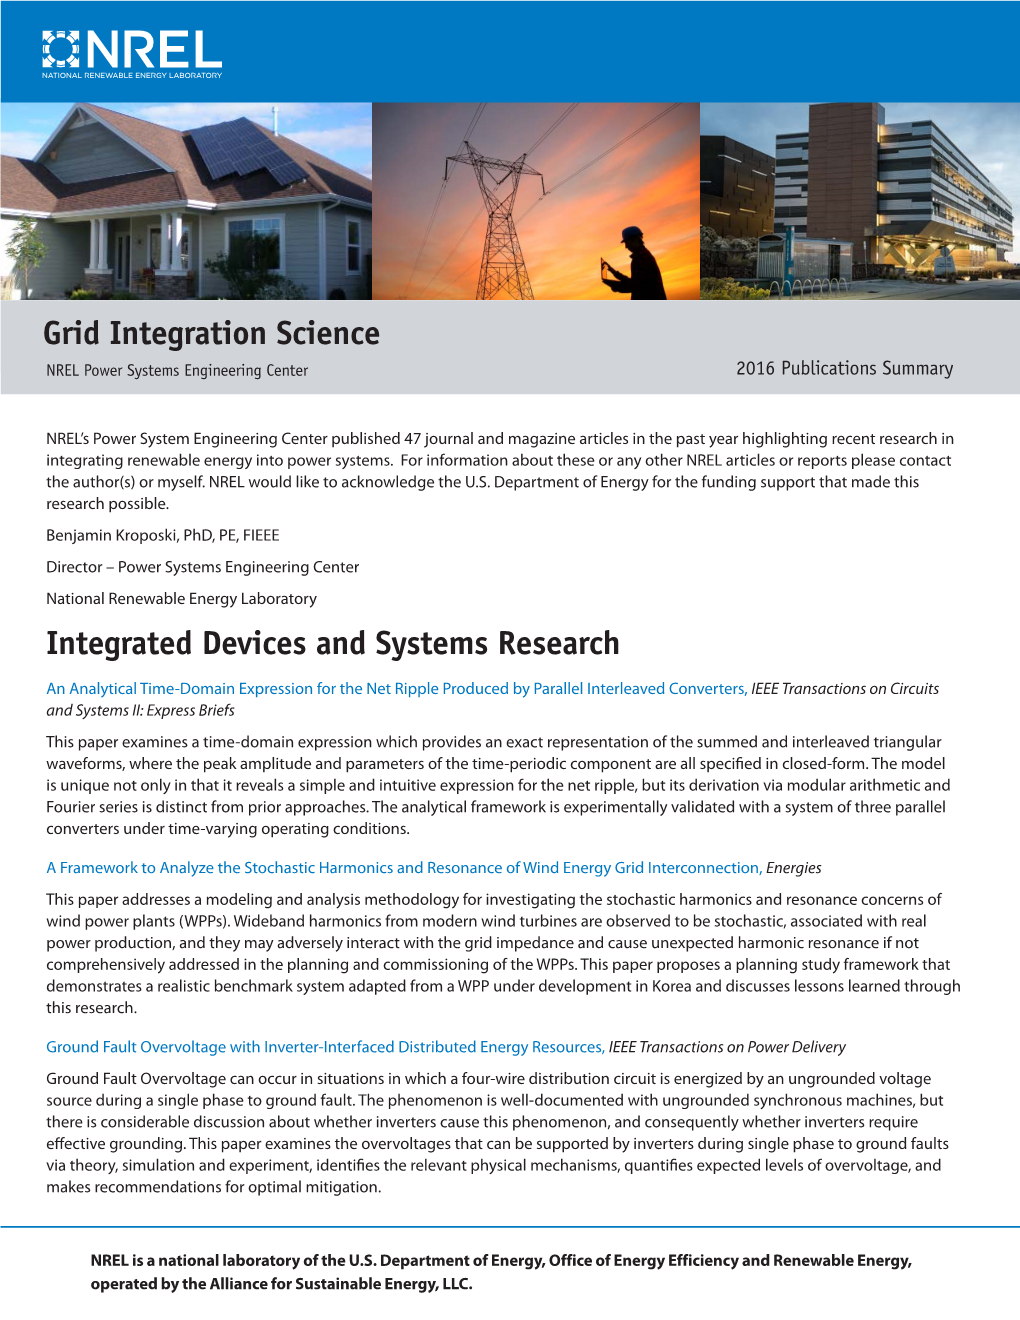 Grid Integration Science, NREL Power Systems Engineering Center